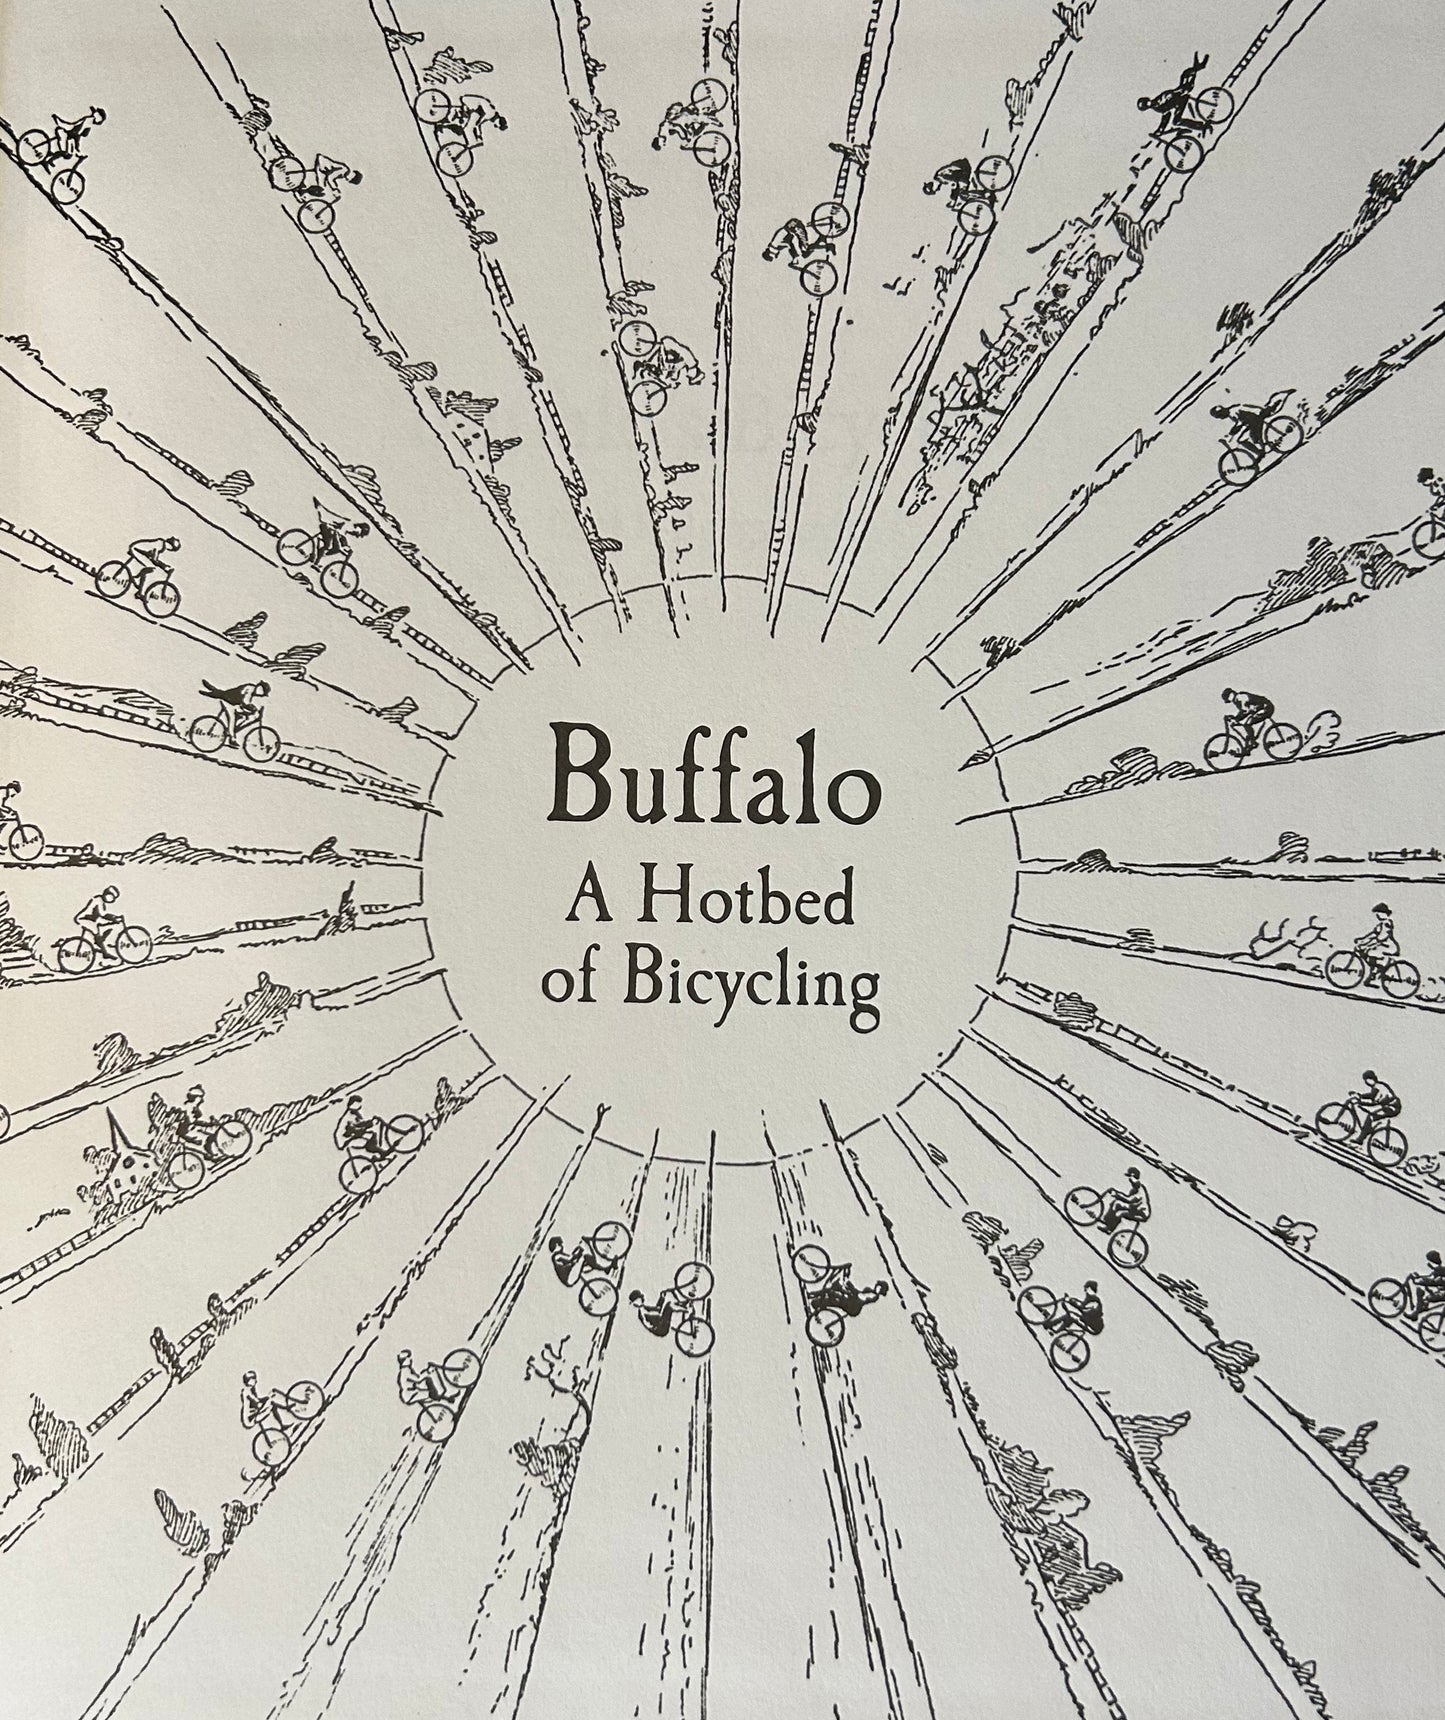 Buffalo's Bicycles by Carl F. Burgwardt